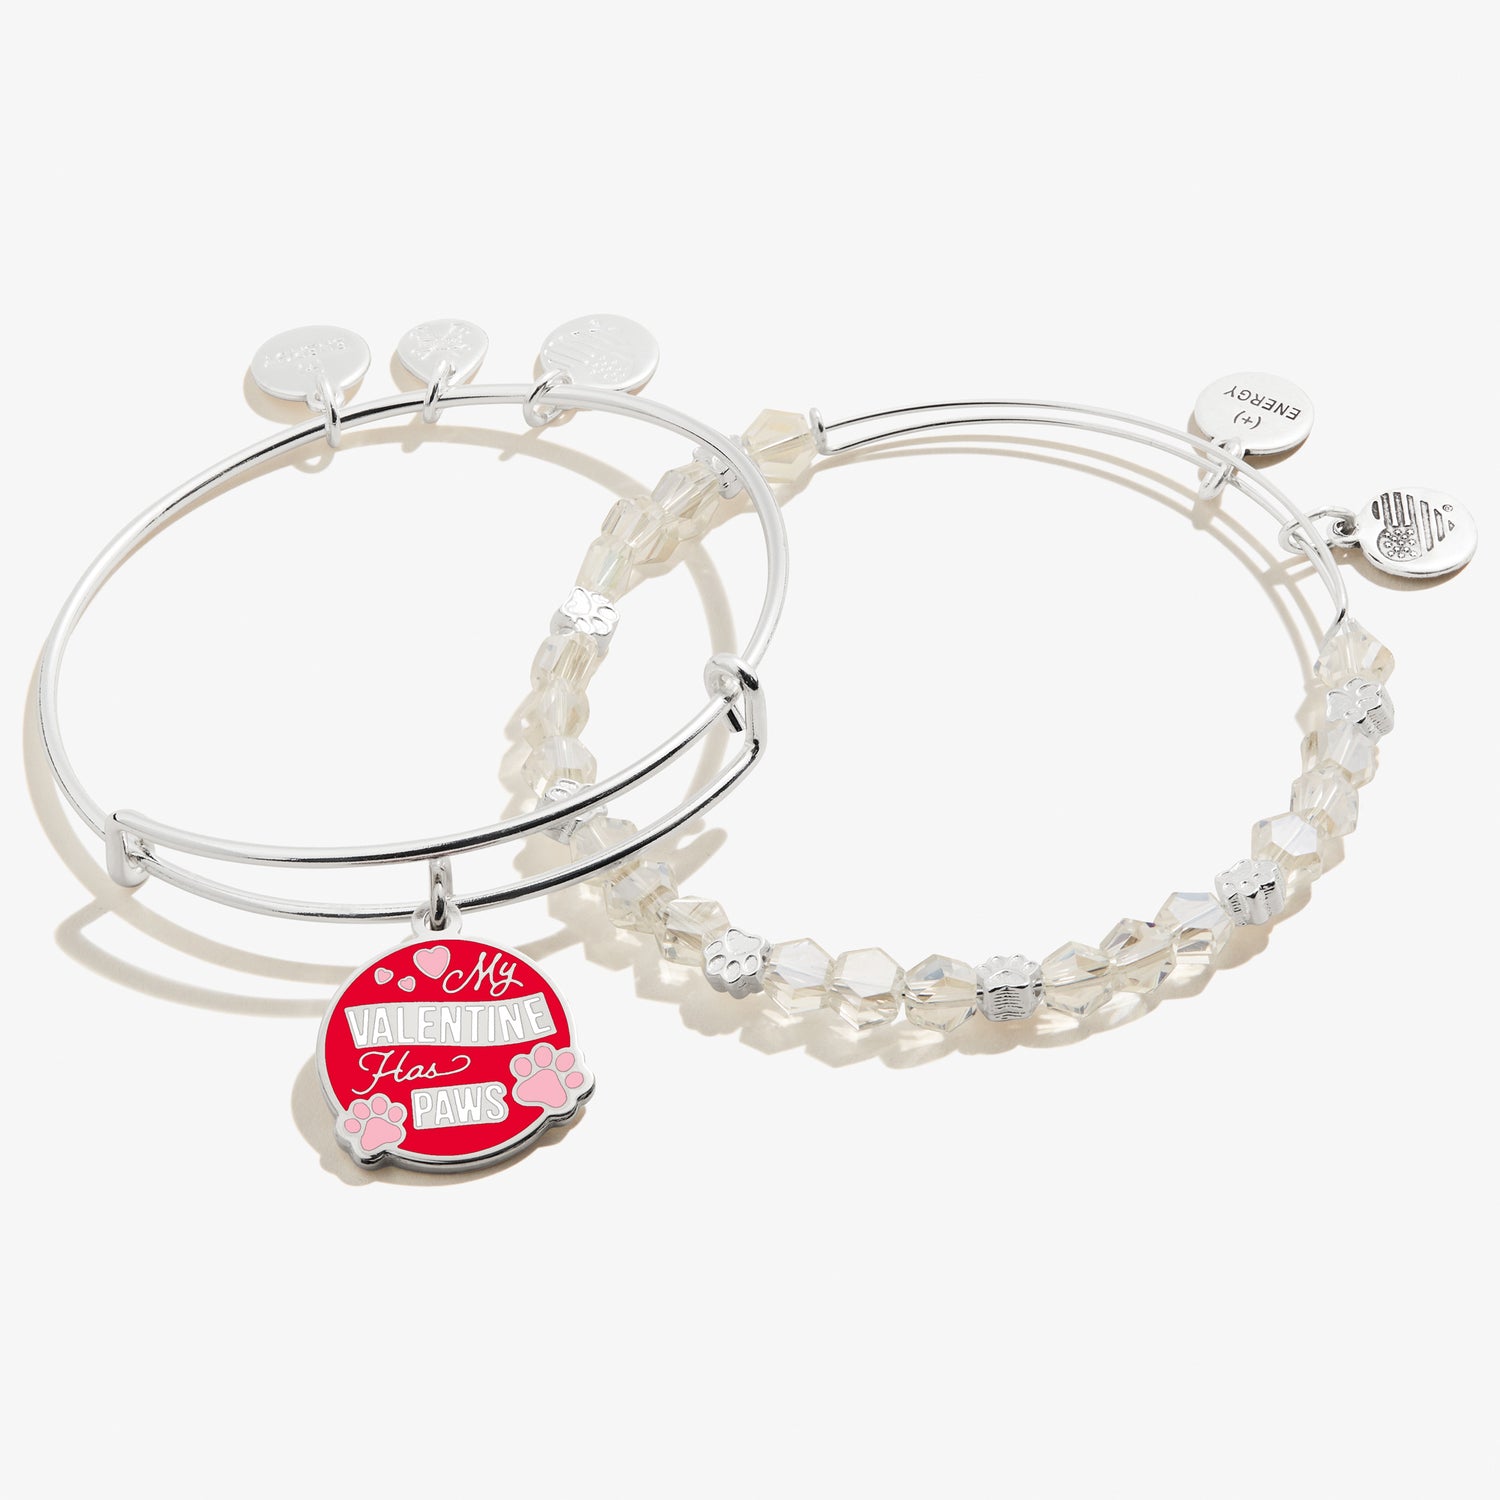 'My Valentine Has Paws' Charm Bangle Bracelet, Set of 2